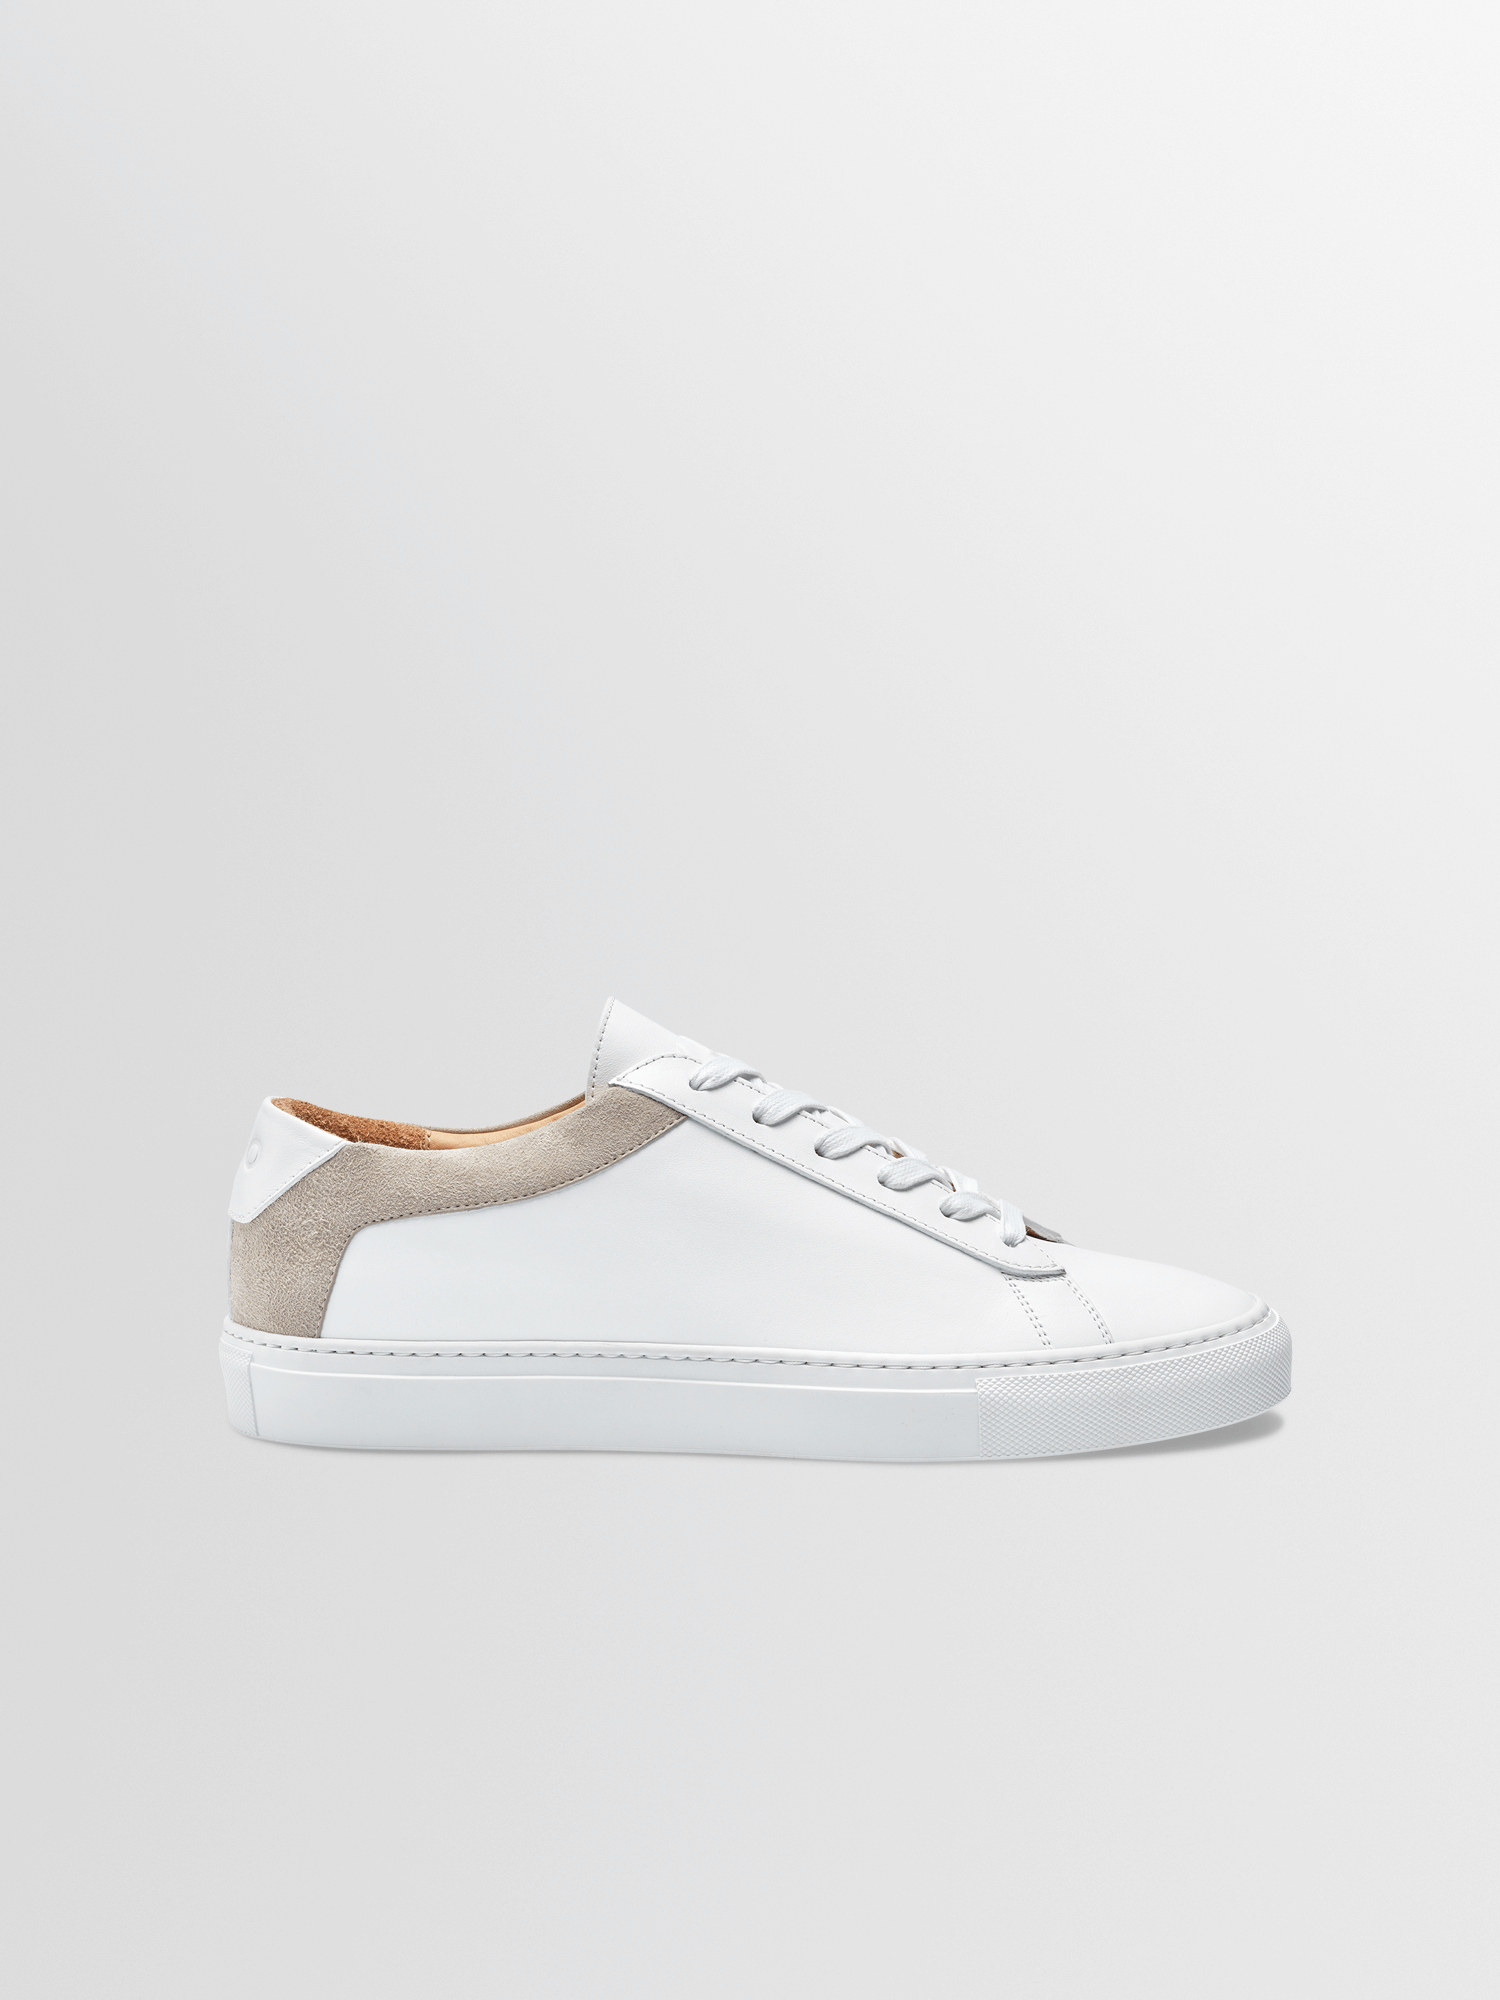 Women's Low Top Leather Sneaker in White | Capri Bianco